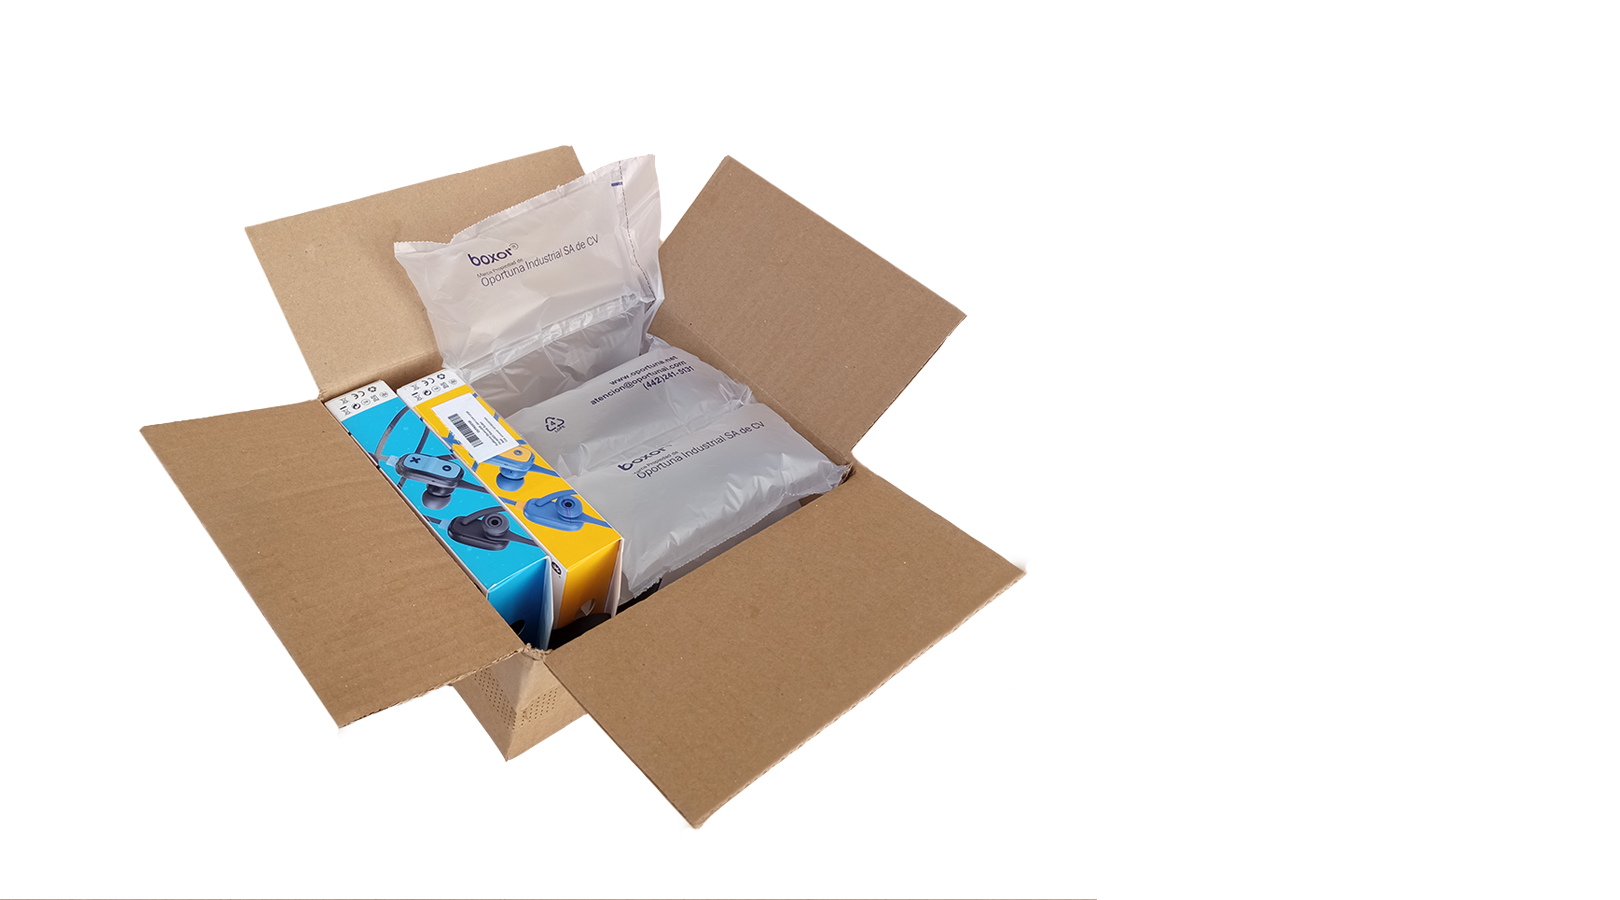 Insumos para paquetes - Amazon rastreo